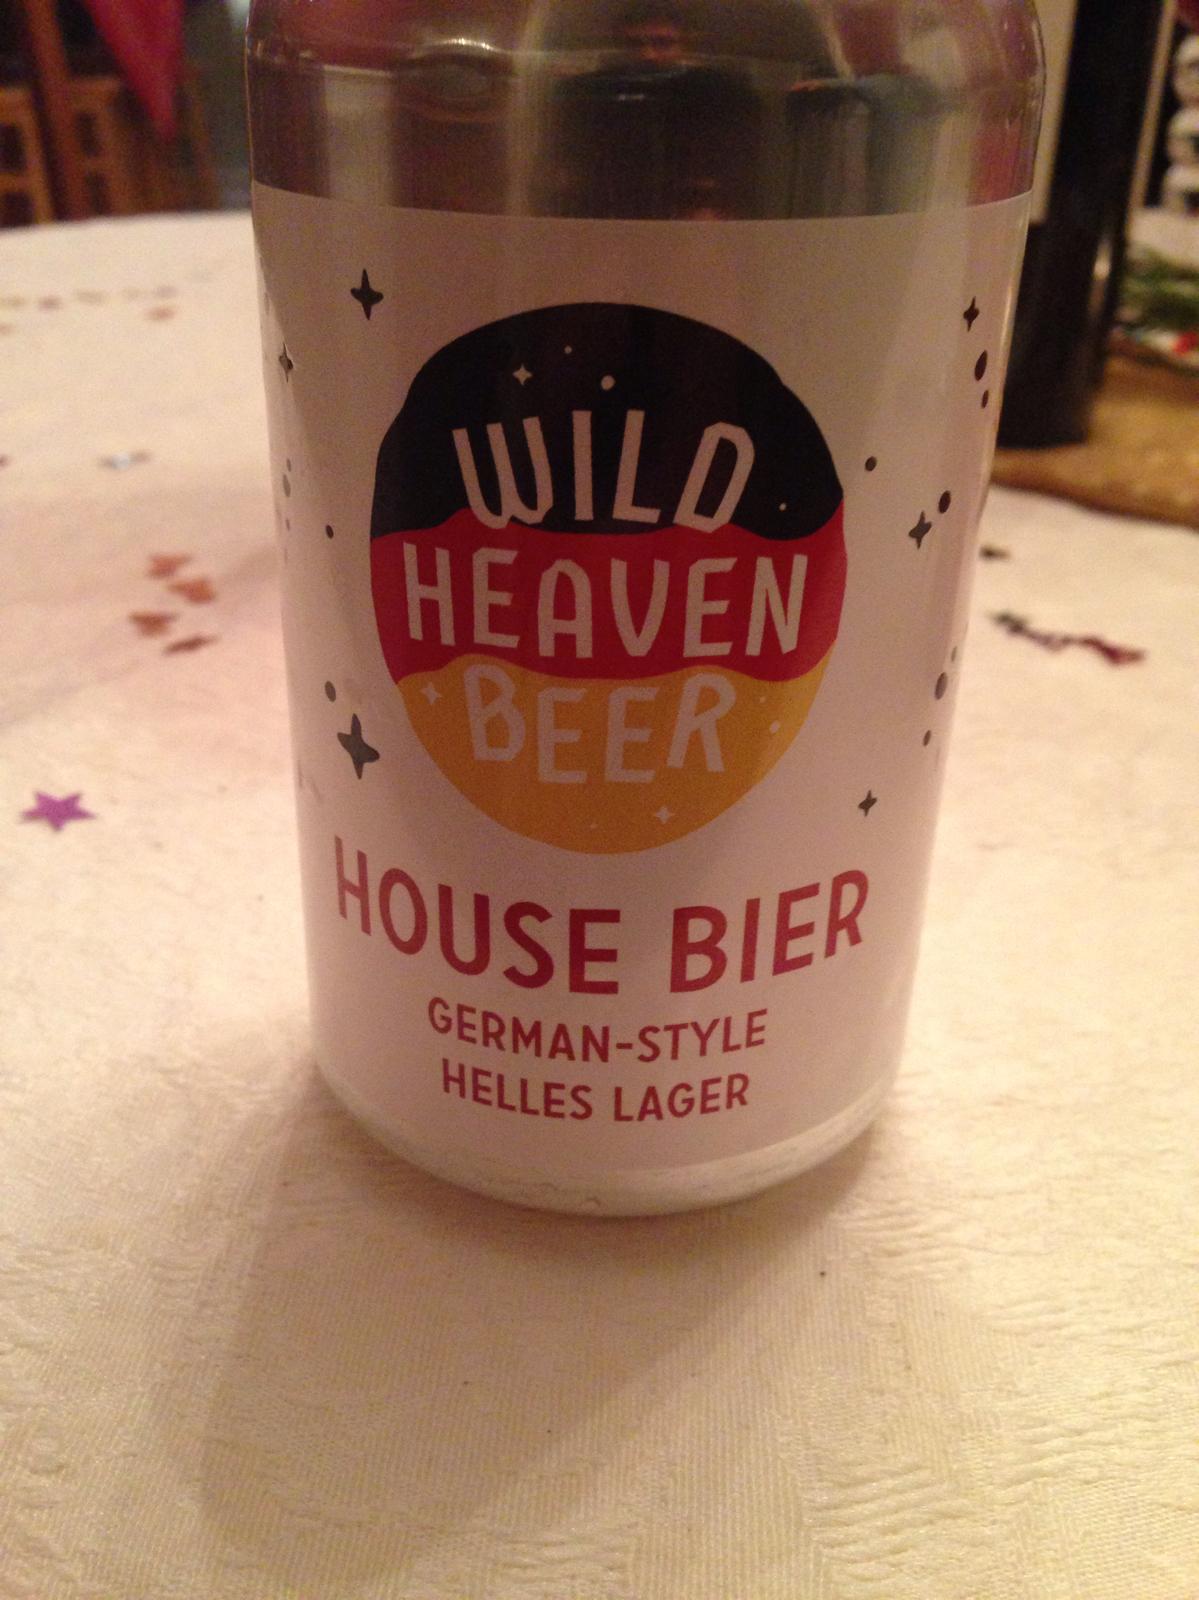 House Bier